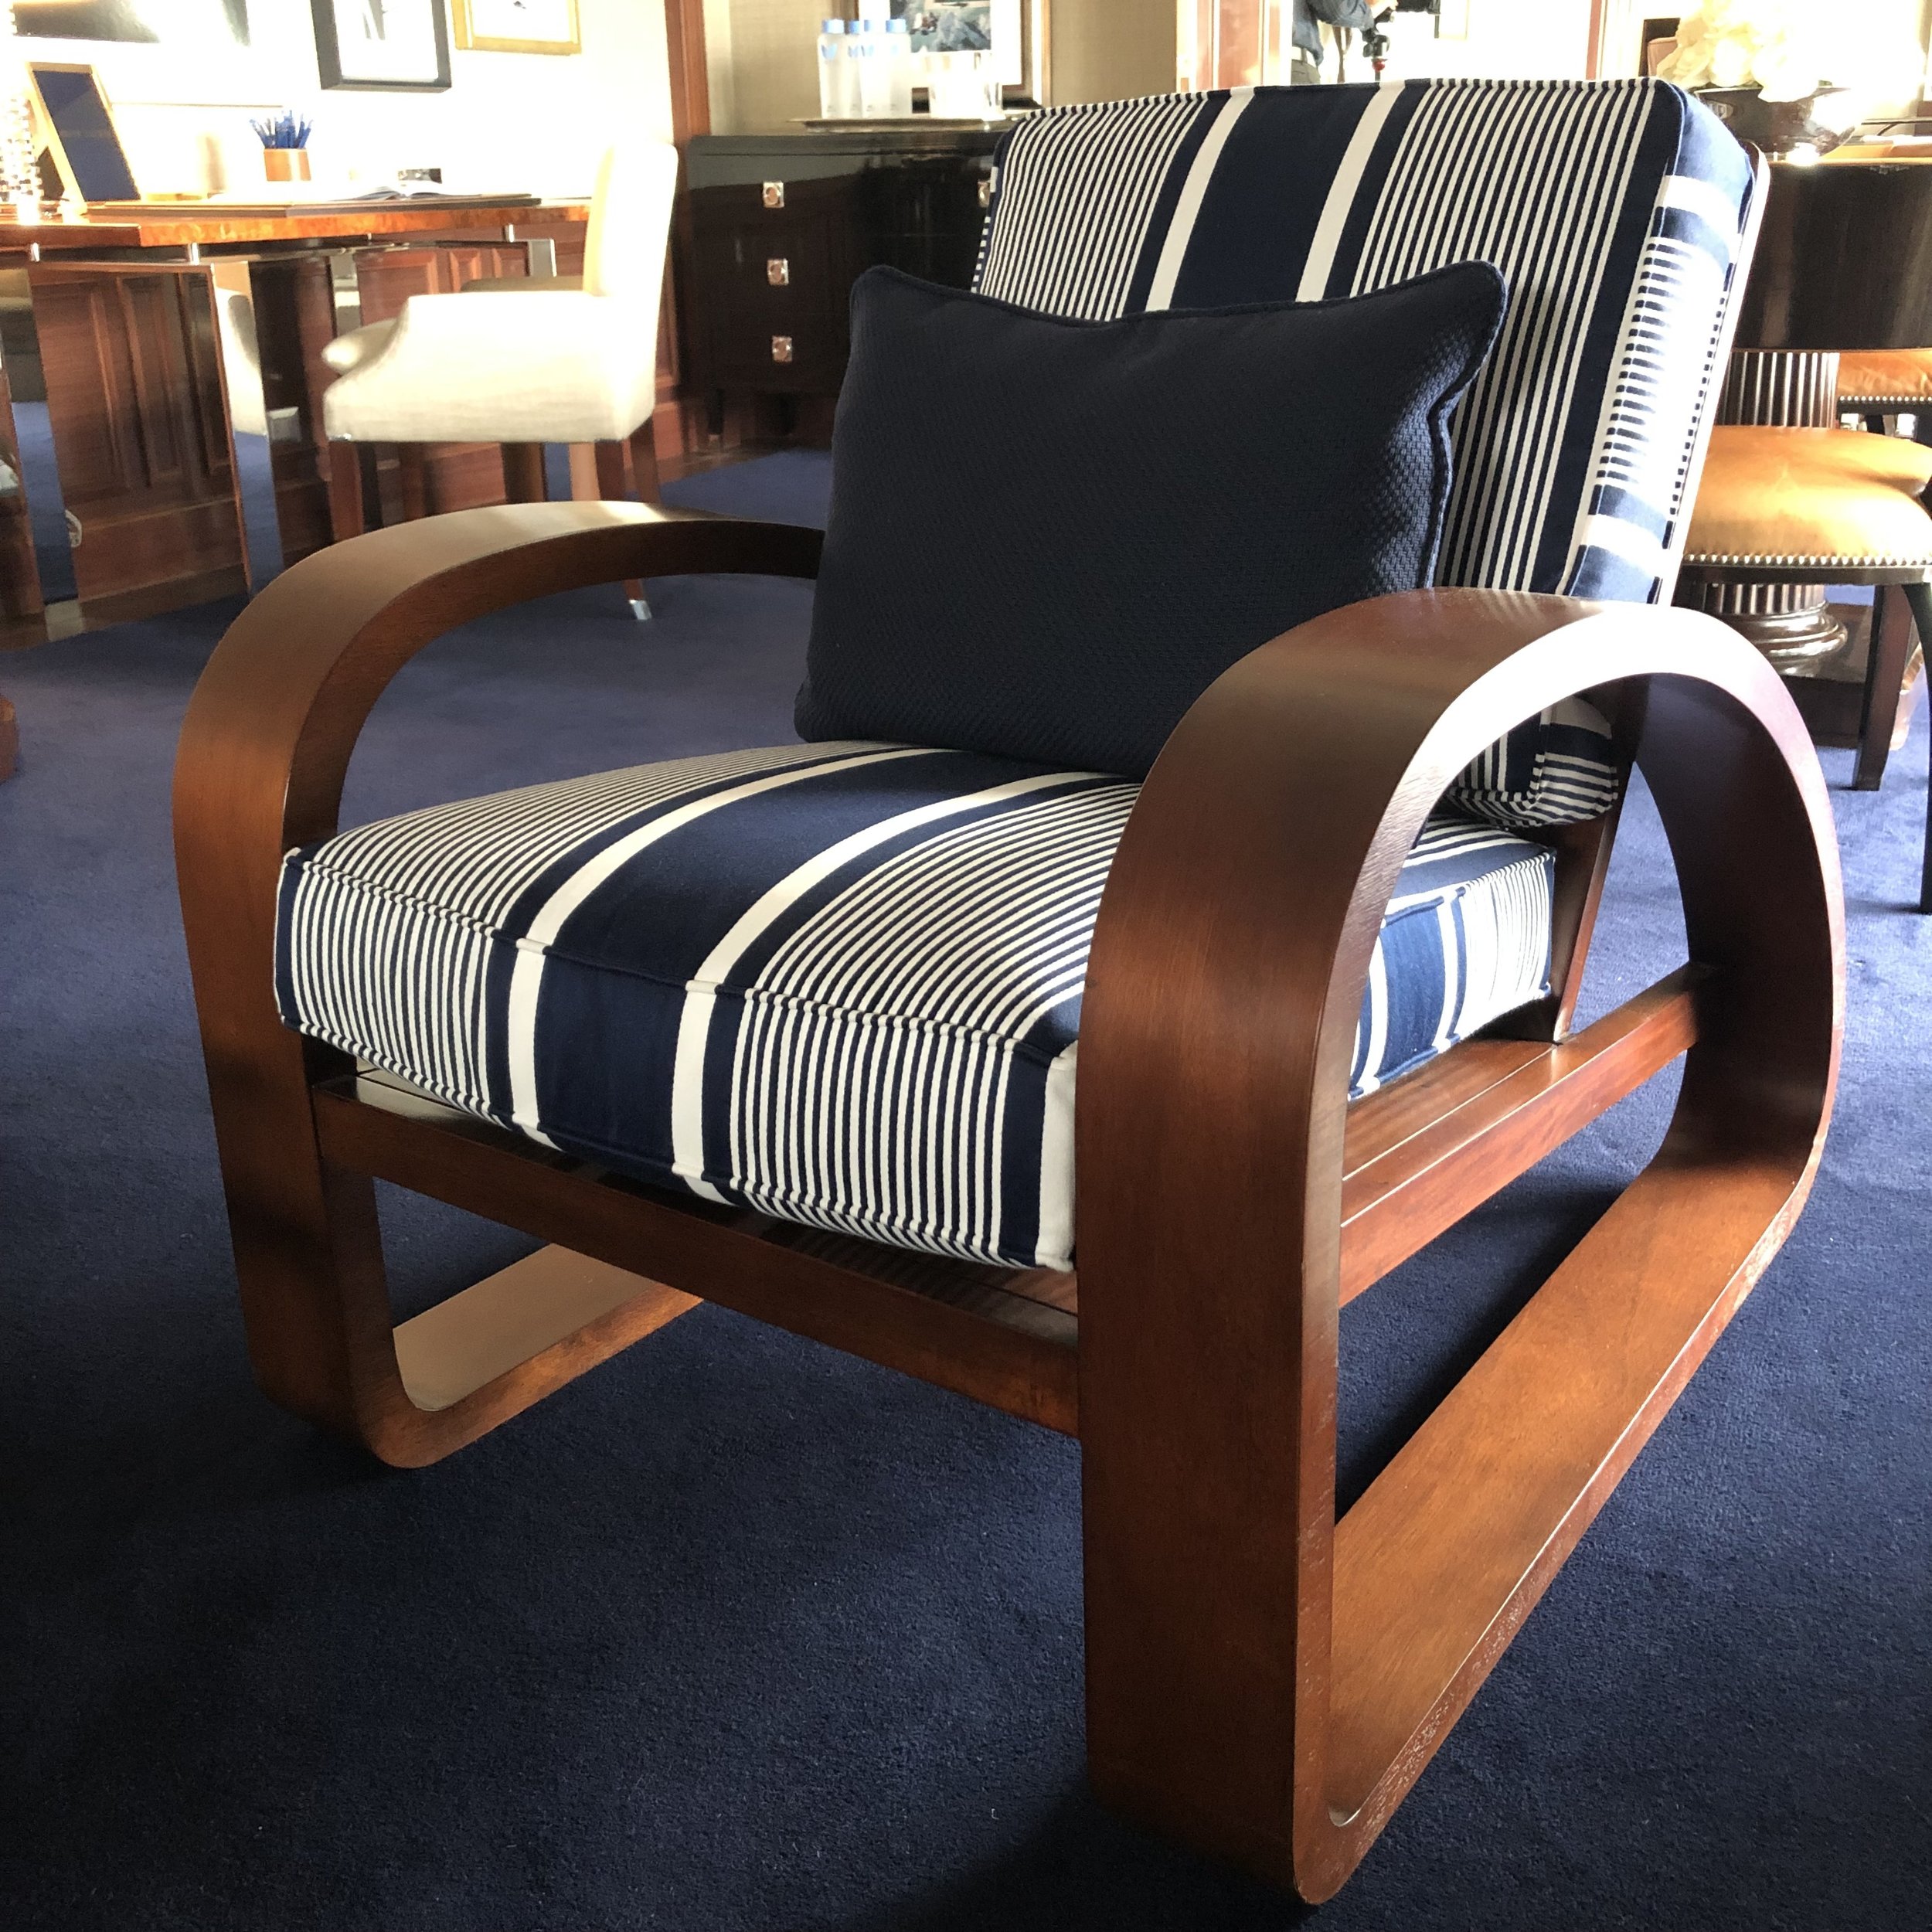 Riviera Final Shots Living Room Yacht Stripe Chair.jpg